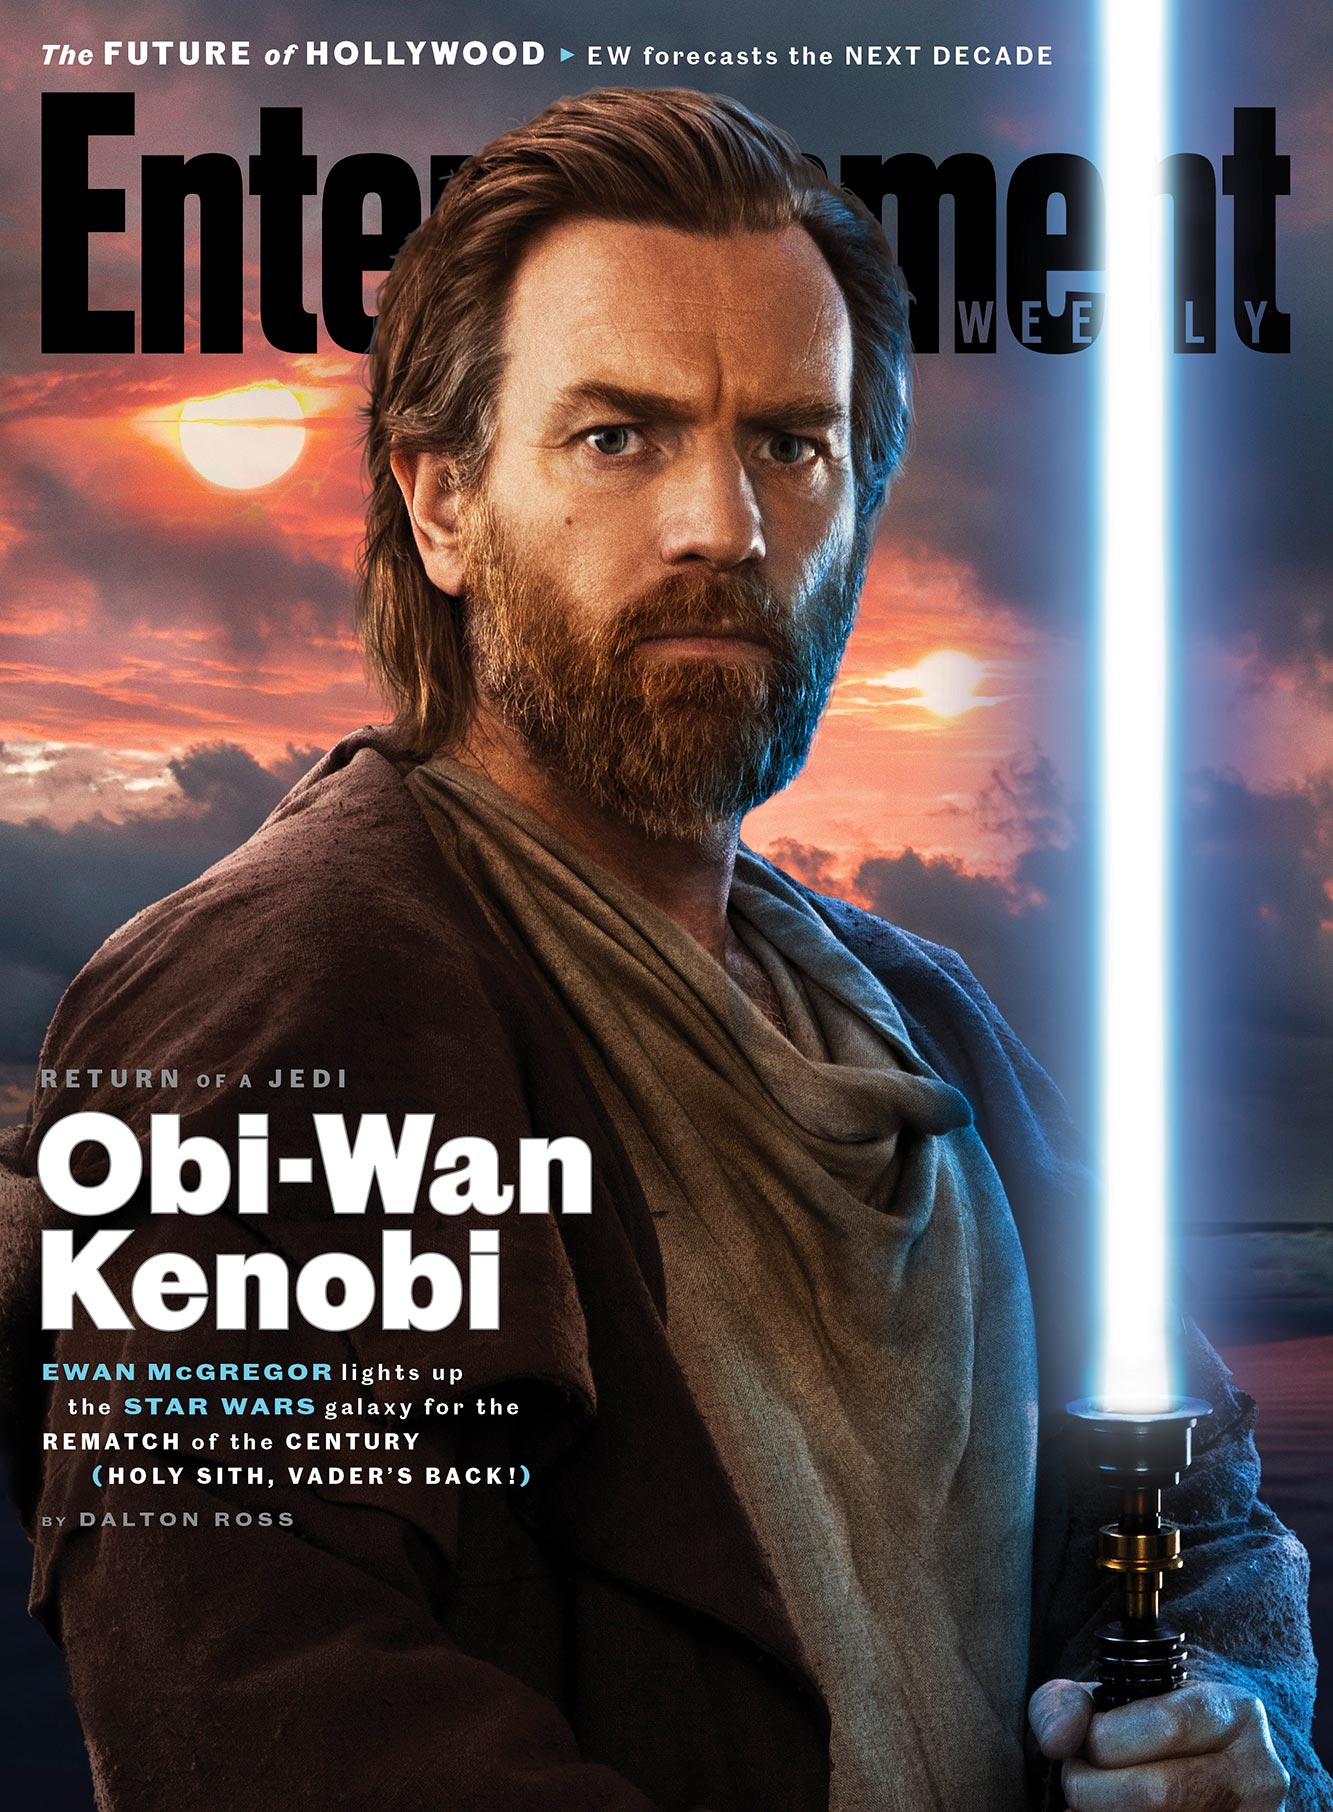 Ewan McGregor on Entertainment Weekly as Obi-Wan Kenobi